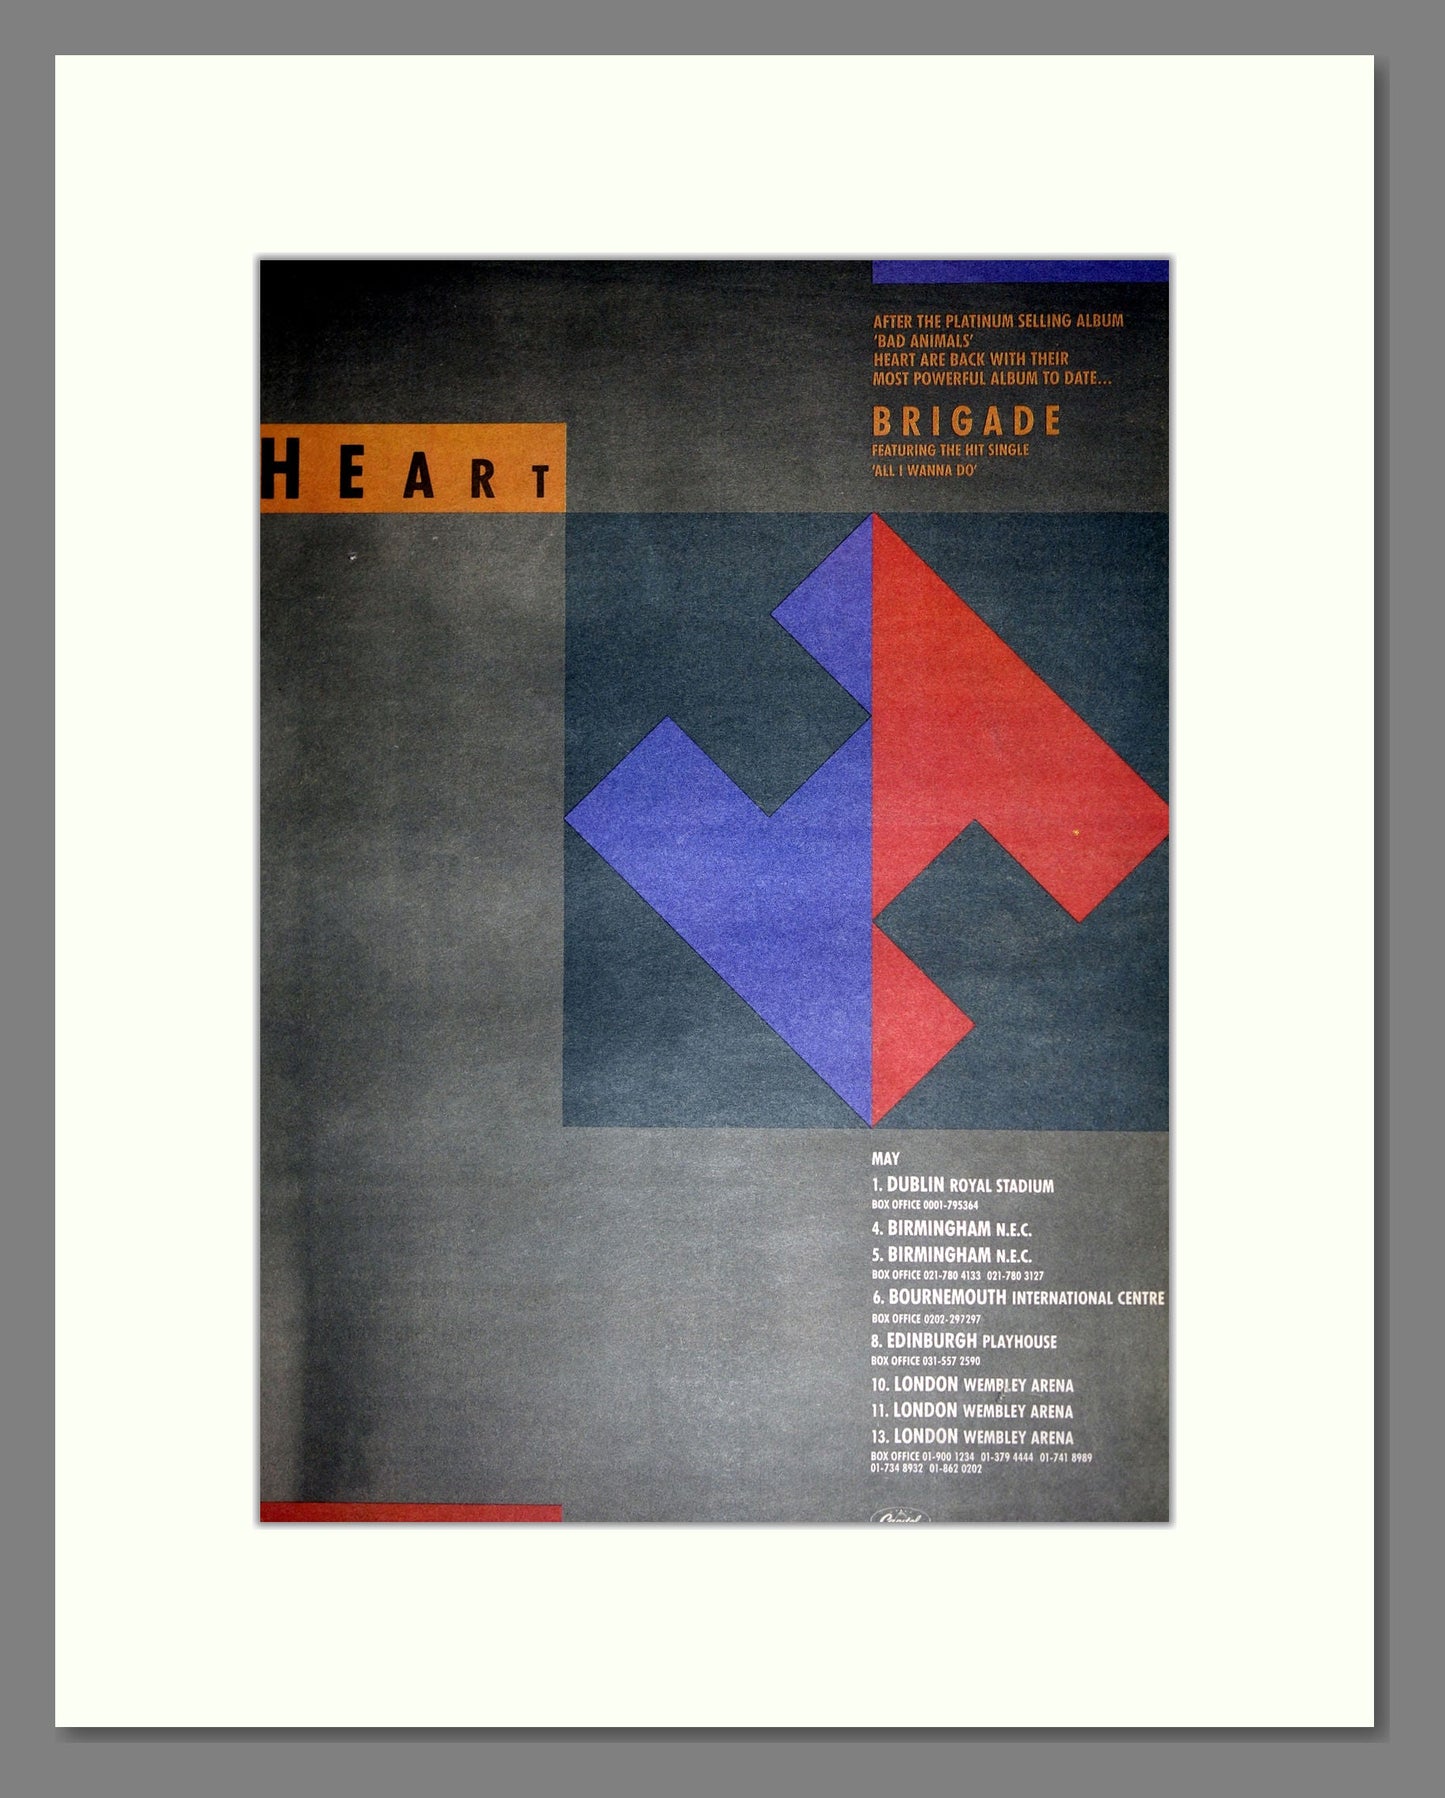 Heart - Brigade (UK Tour). Vintage Advert 1990 (ref AD16915)